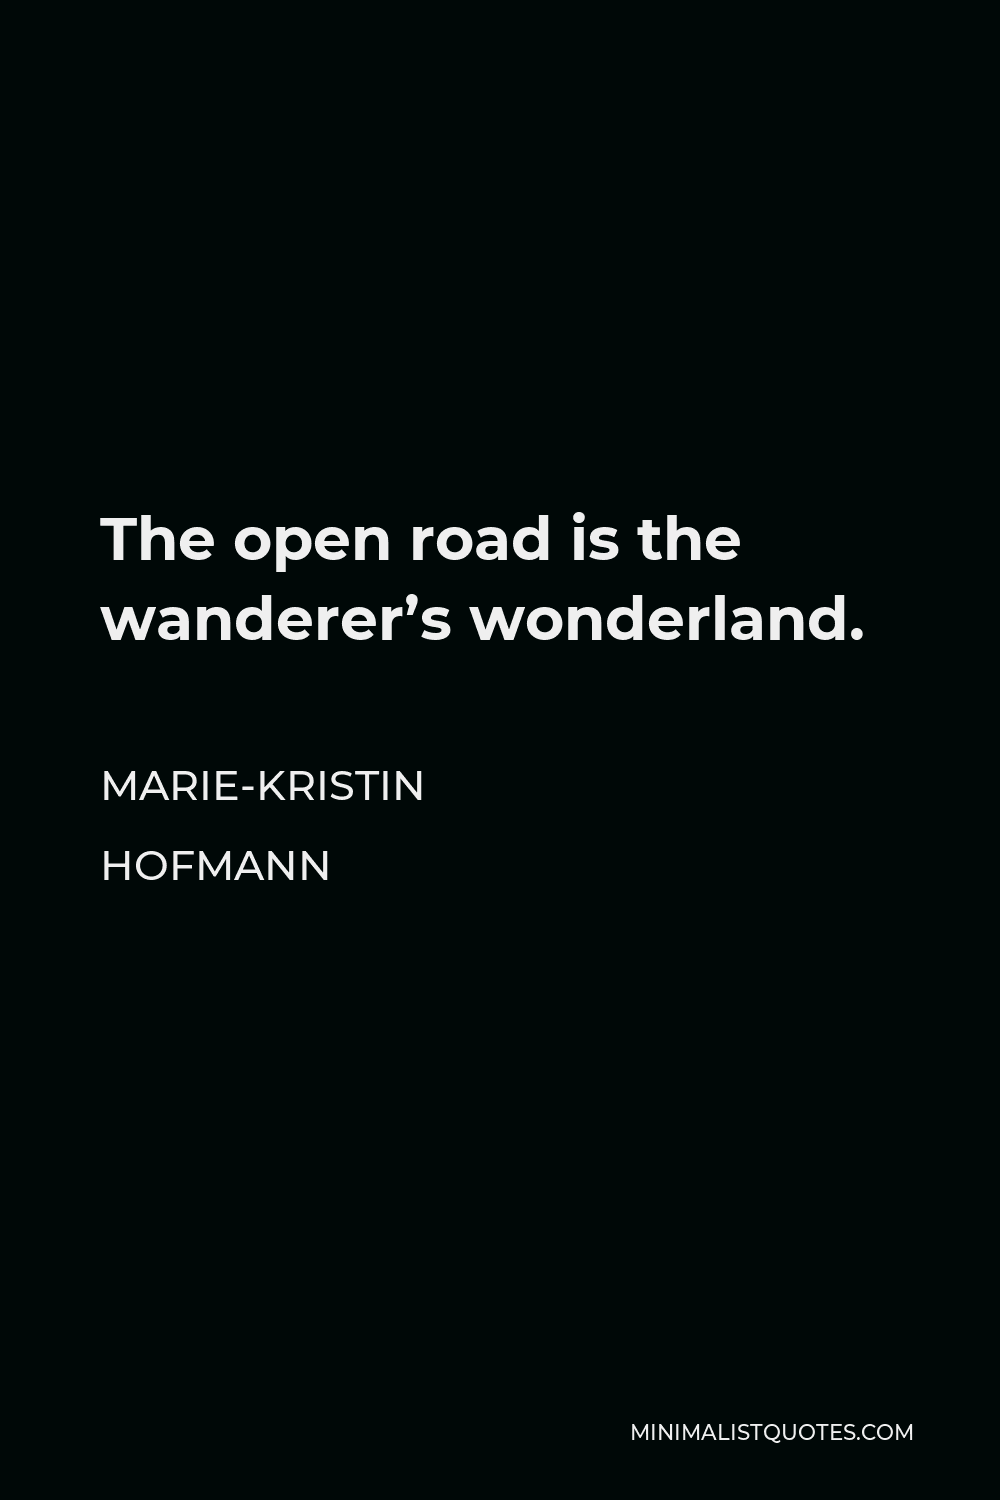 Marie-Kristin Hofmann Quote - The open road is the wanderer’s wonderland.